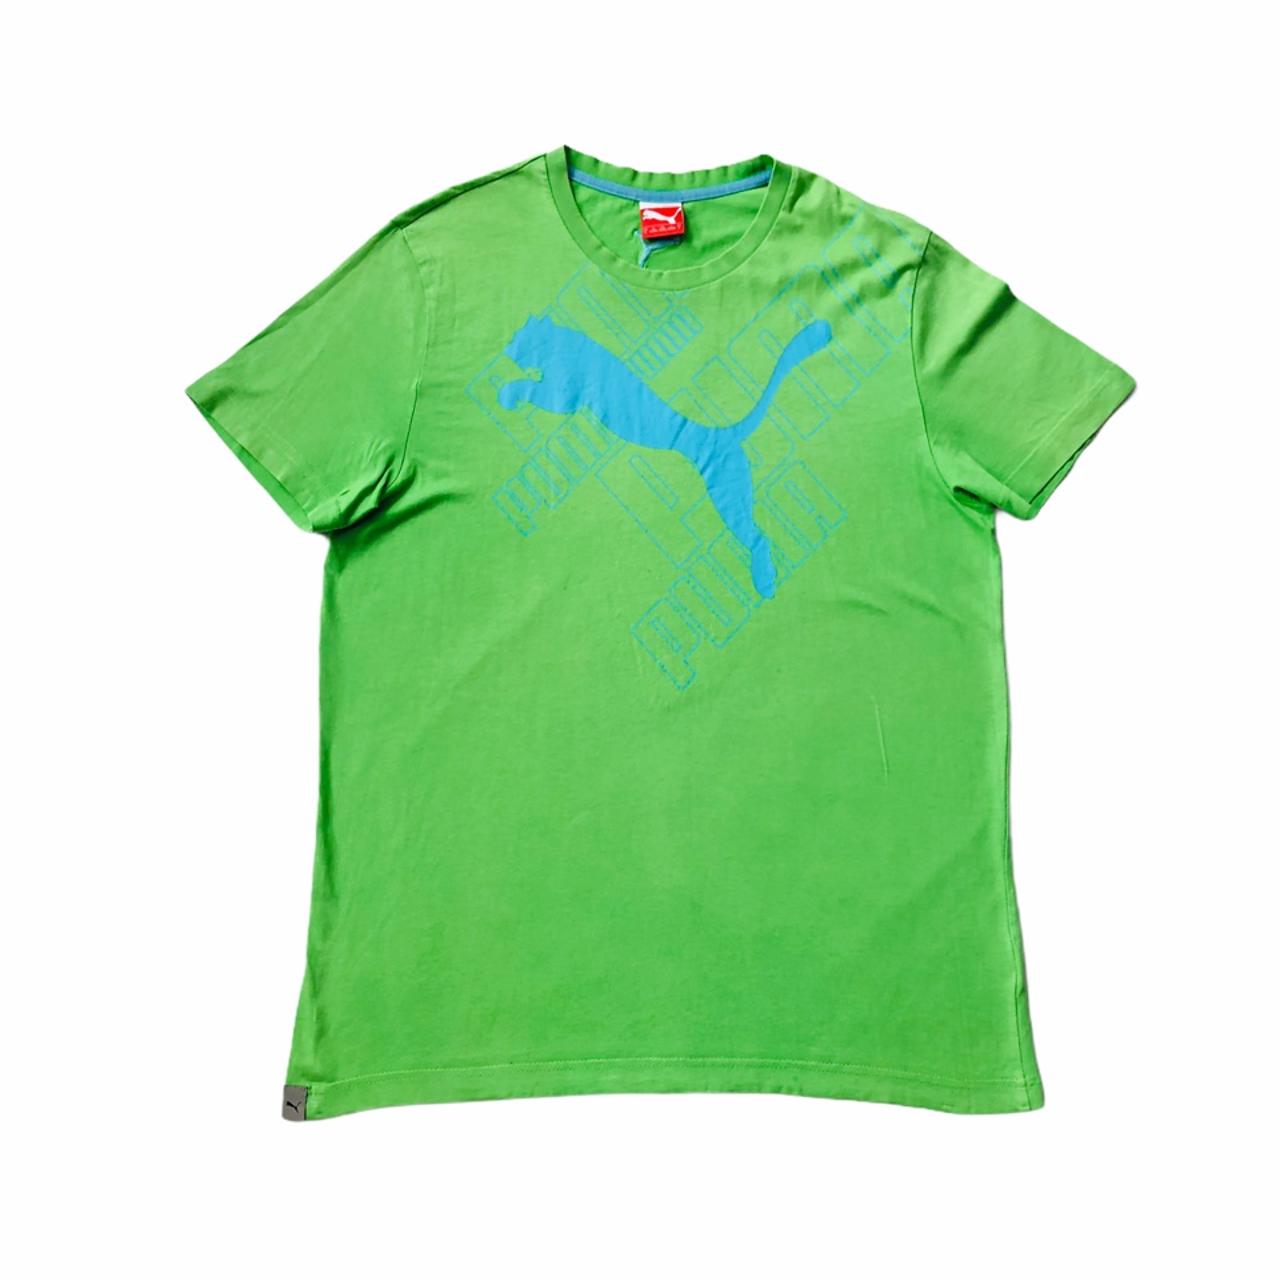 Puma Men's Blue and Green T-shirt | Depop